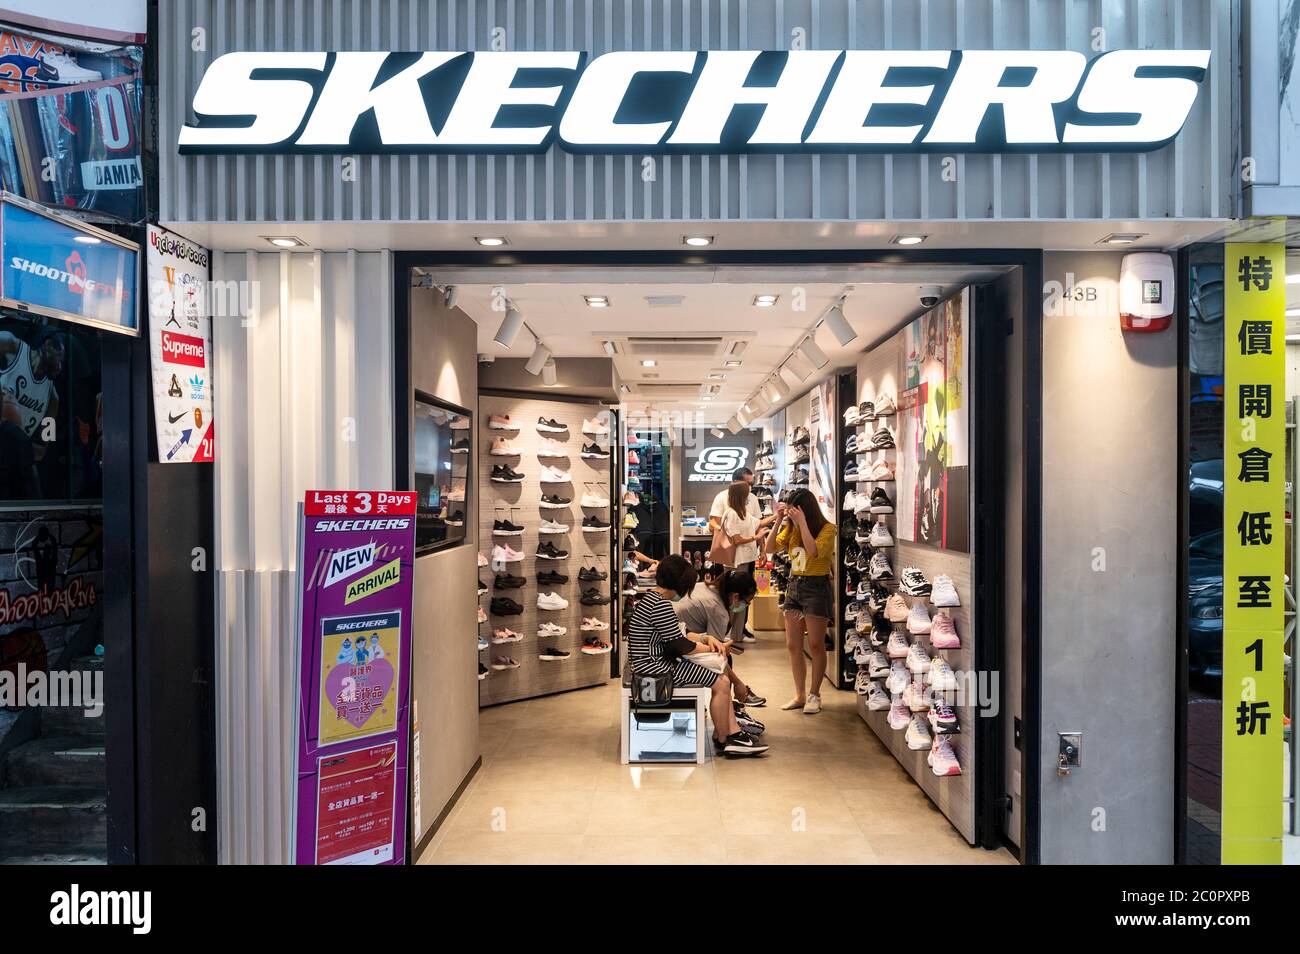 American lifestyle and performance footwear brand Skechers store seen ...